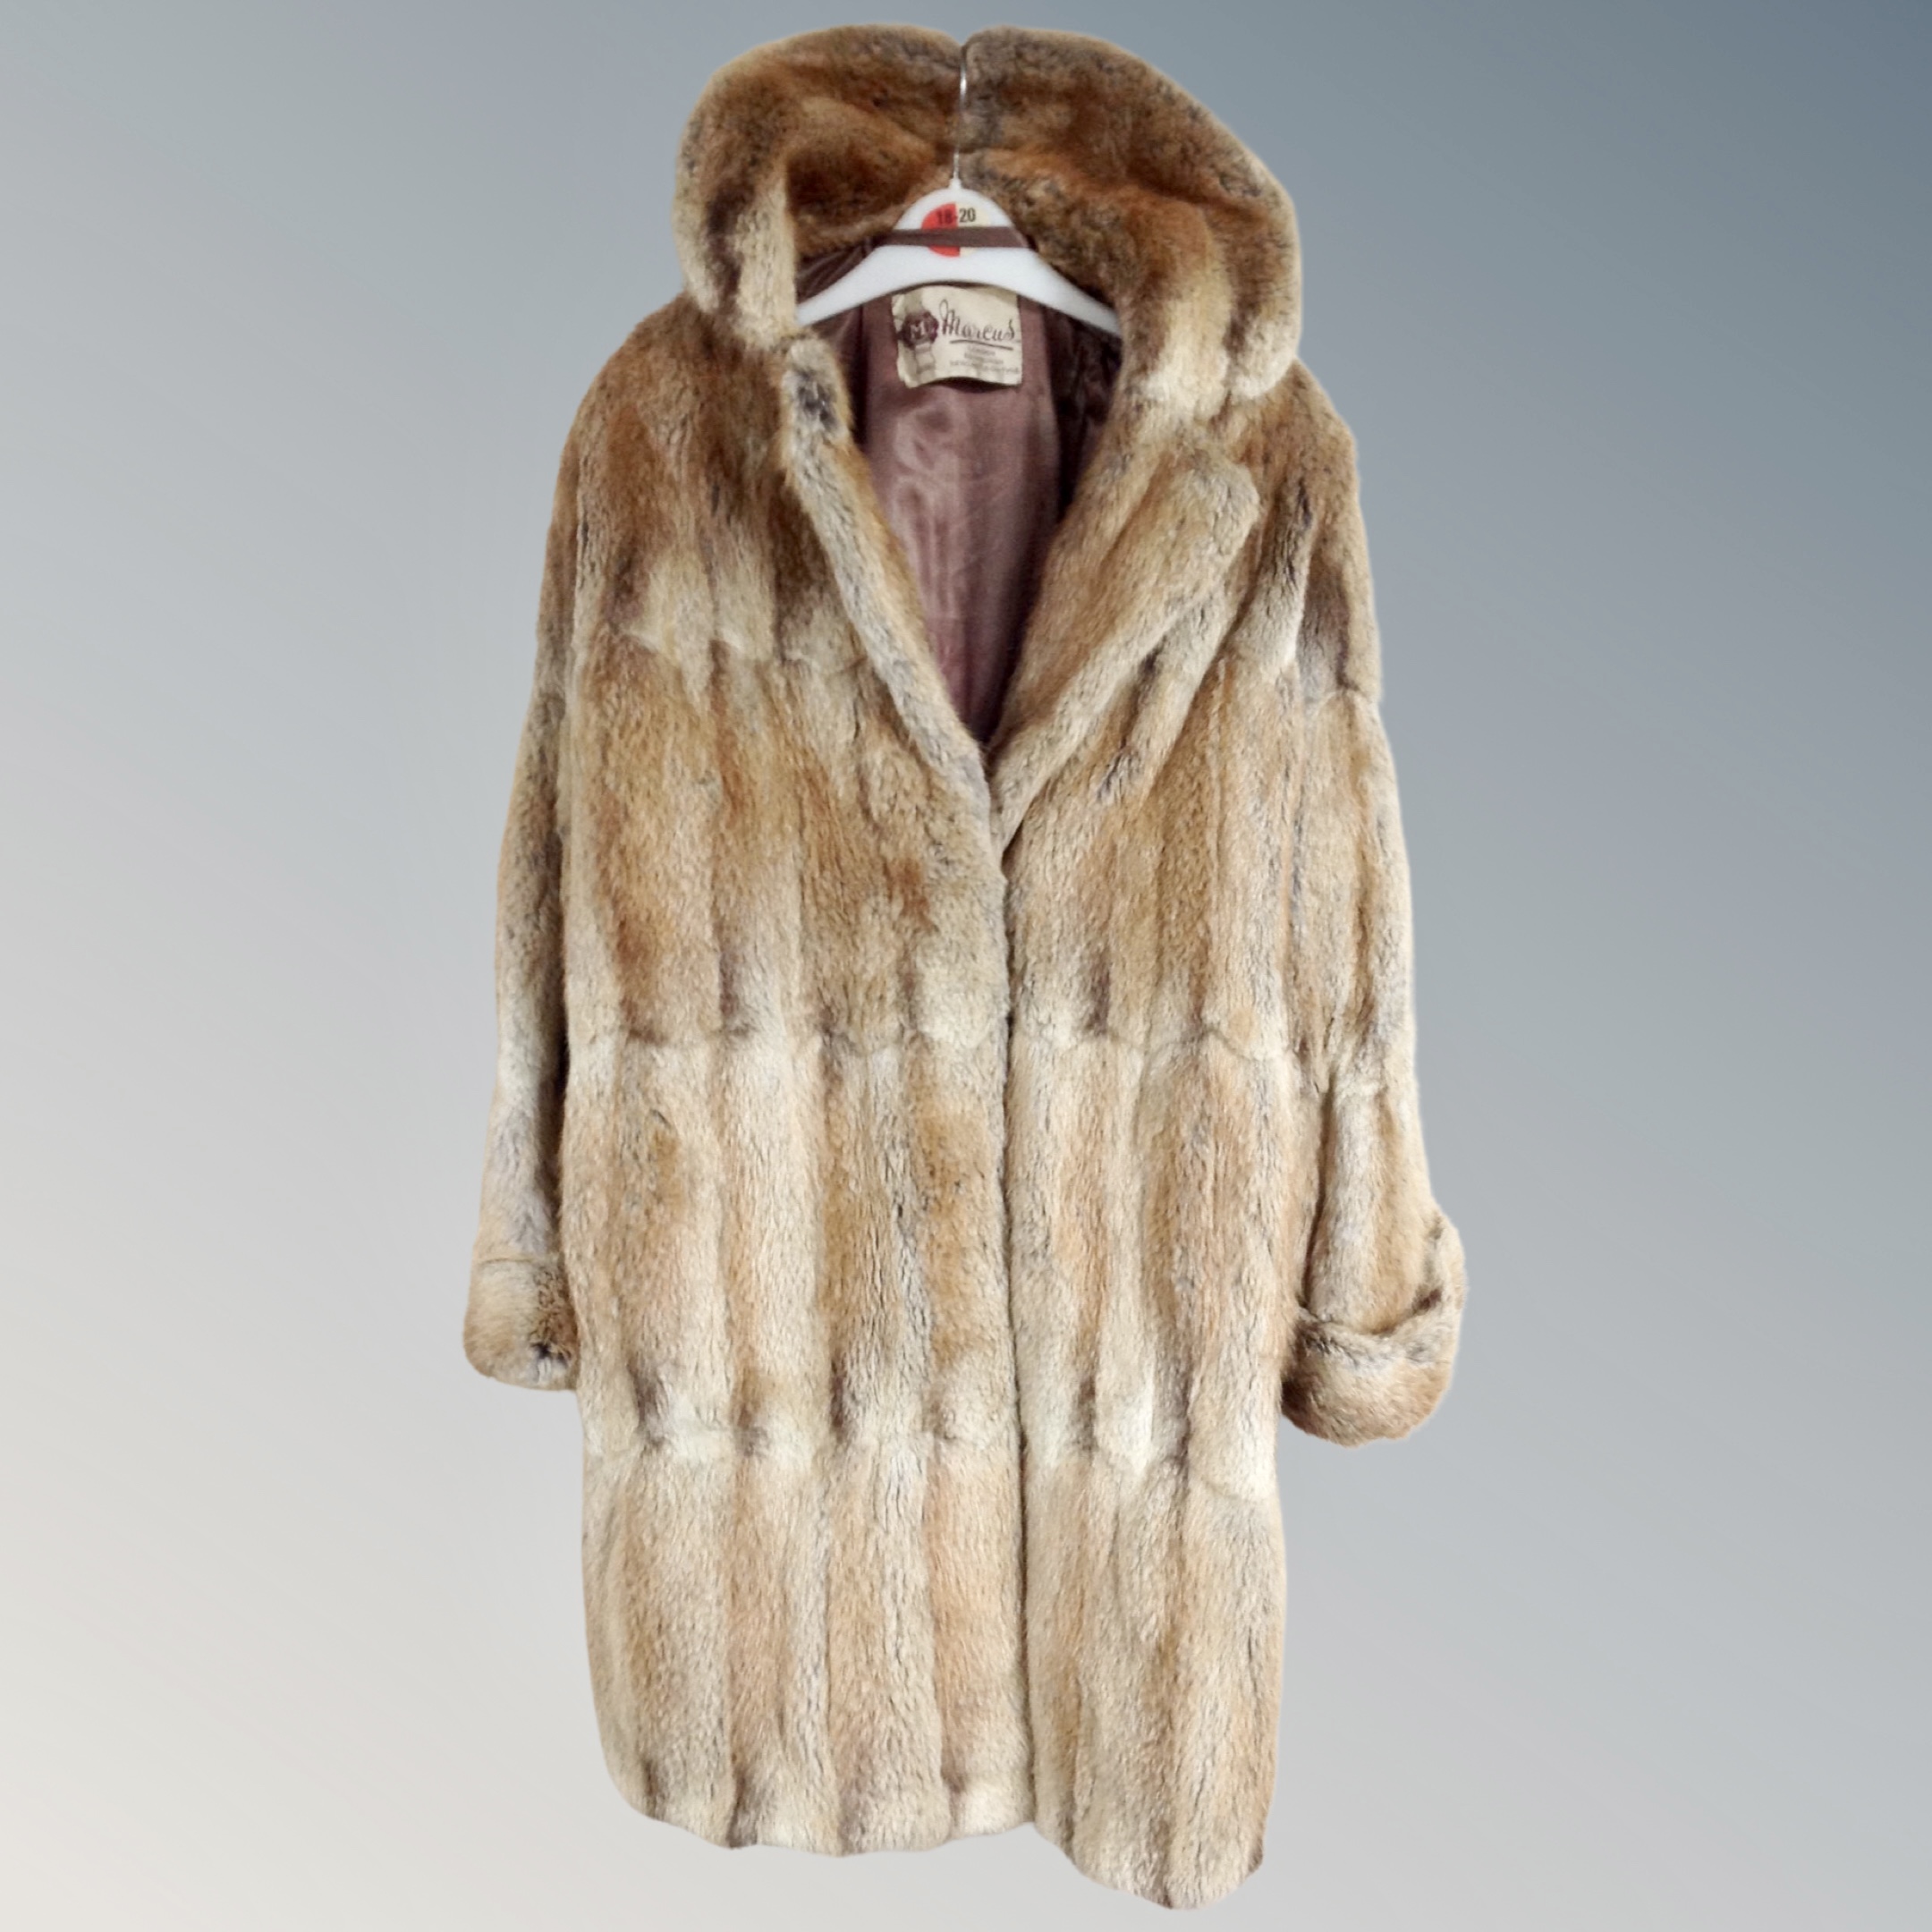 An early 20th century mink fur coat.